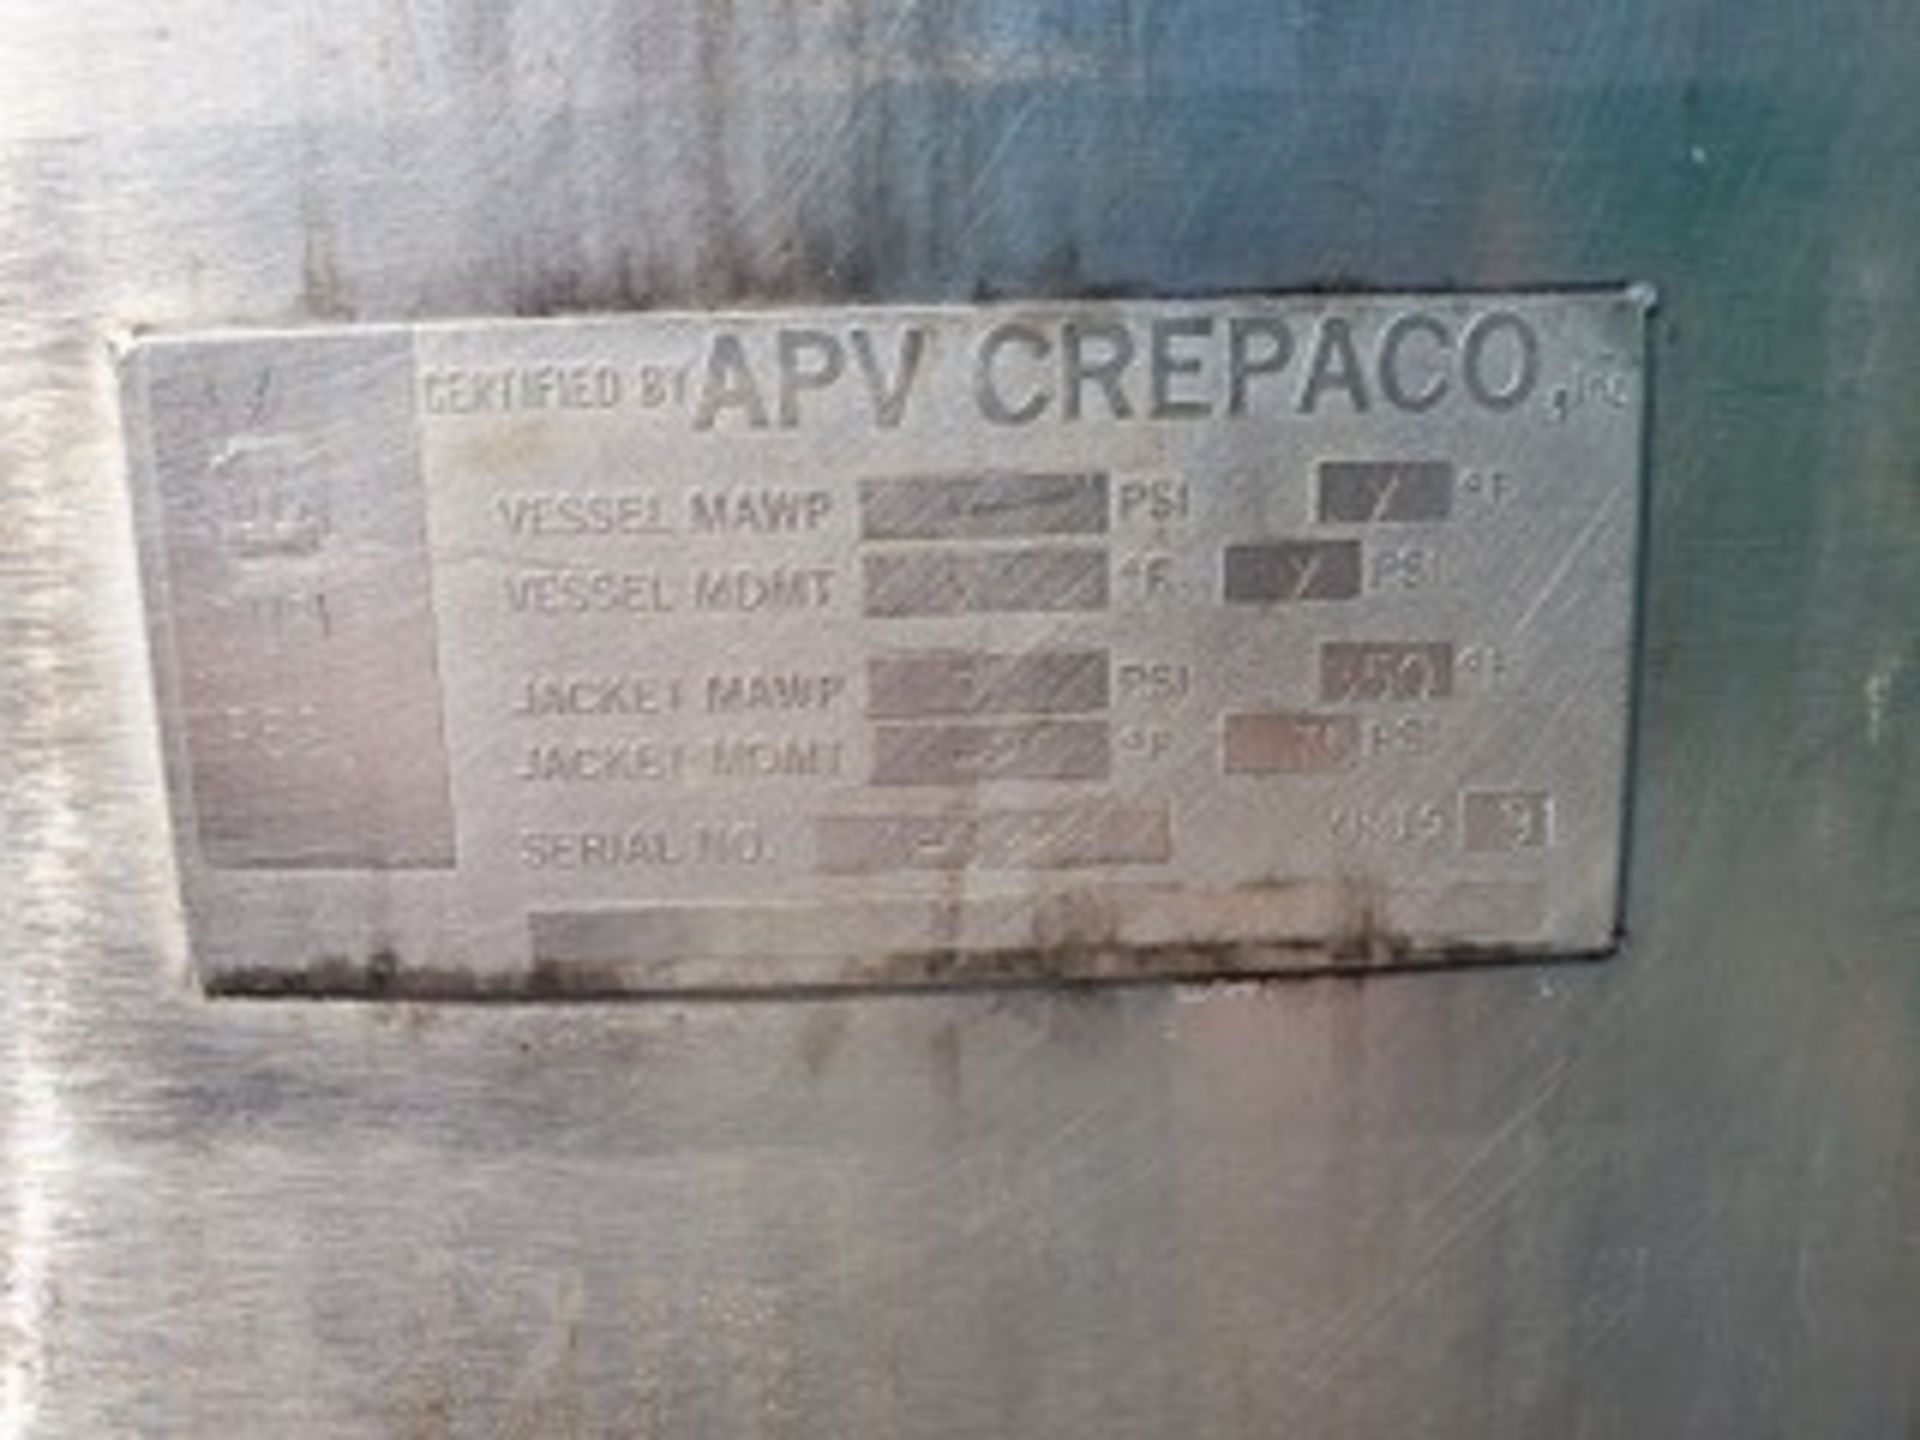 APV Crepaco 300 Gal. Jacketed Mix Tank, Max.75 psi - 350 Degree F Max. Temp., 14" Impeller - 2-3/ - Image 7 of 8